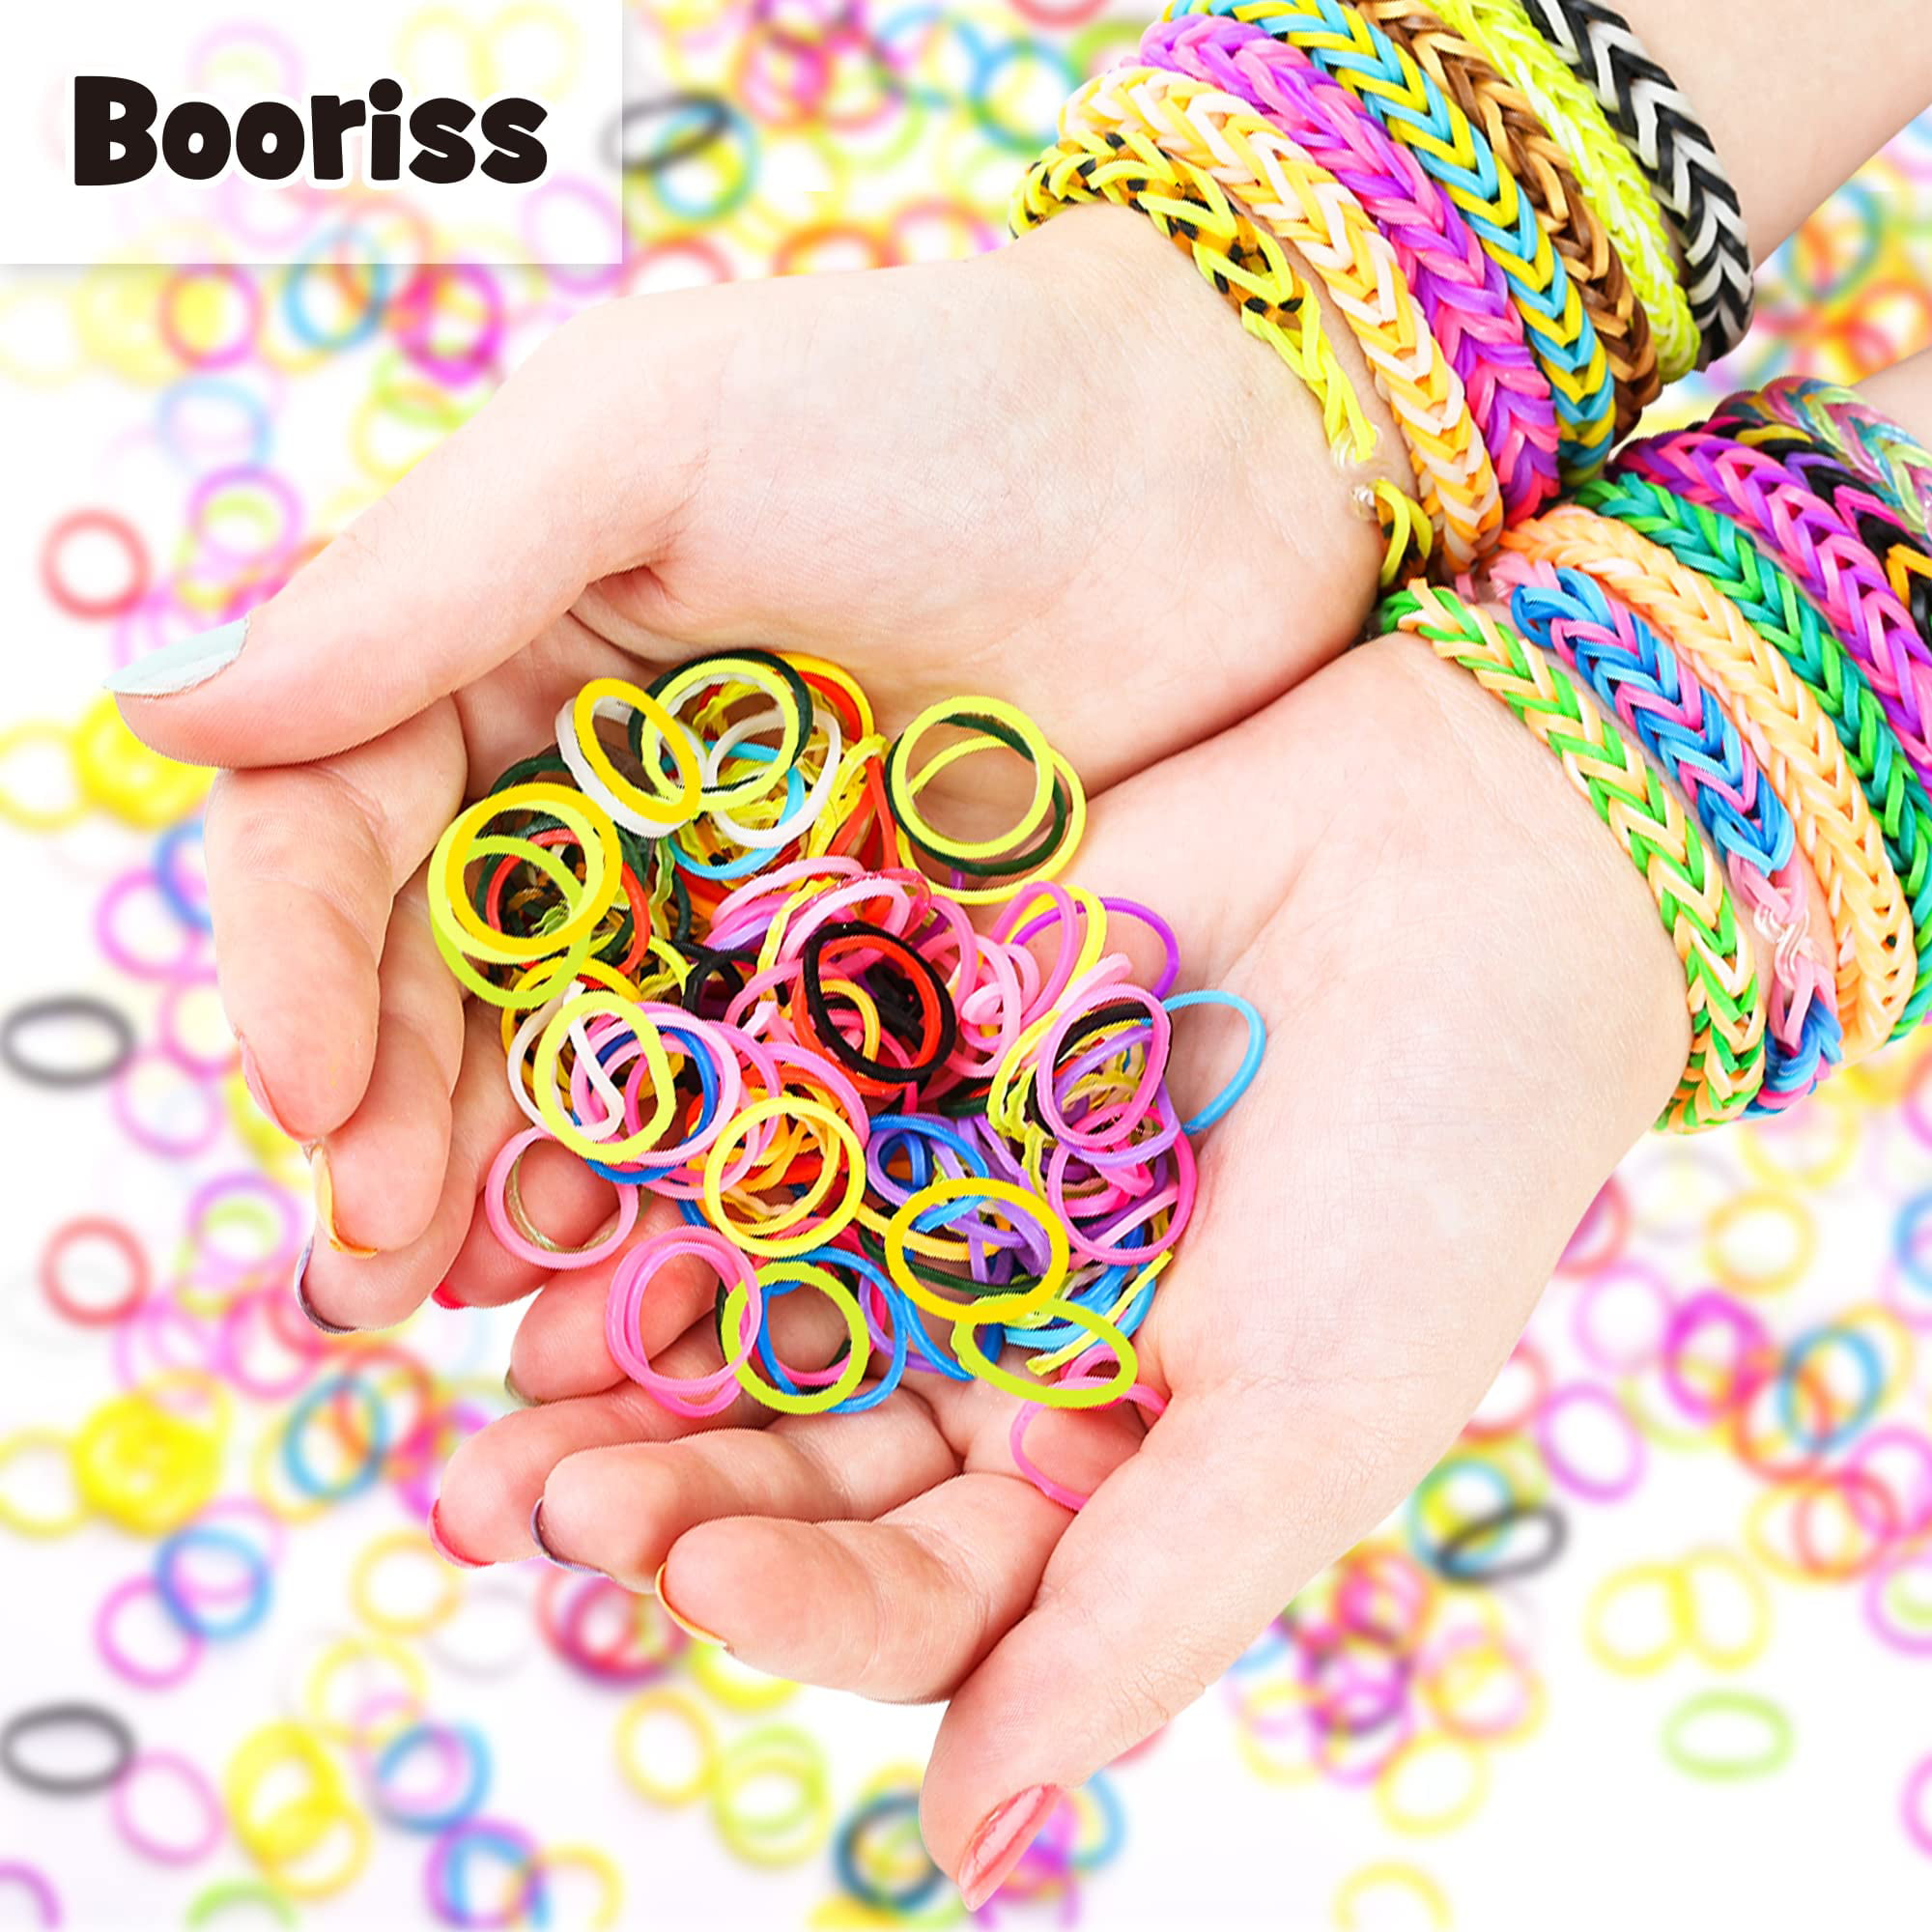 VICOVI 7100+ Colorful Rubber Bands Refill Kits for Kids Girls Boys DIY, Bracelet  Making Kit Include:6500 Bracelet Bands 300 Clip